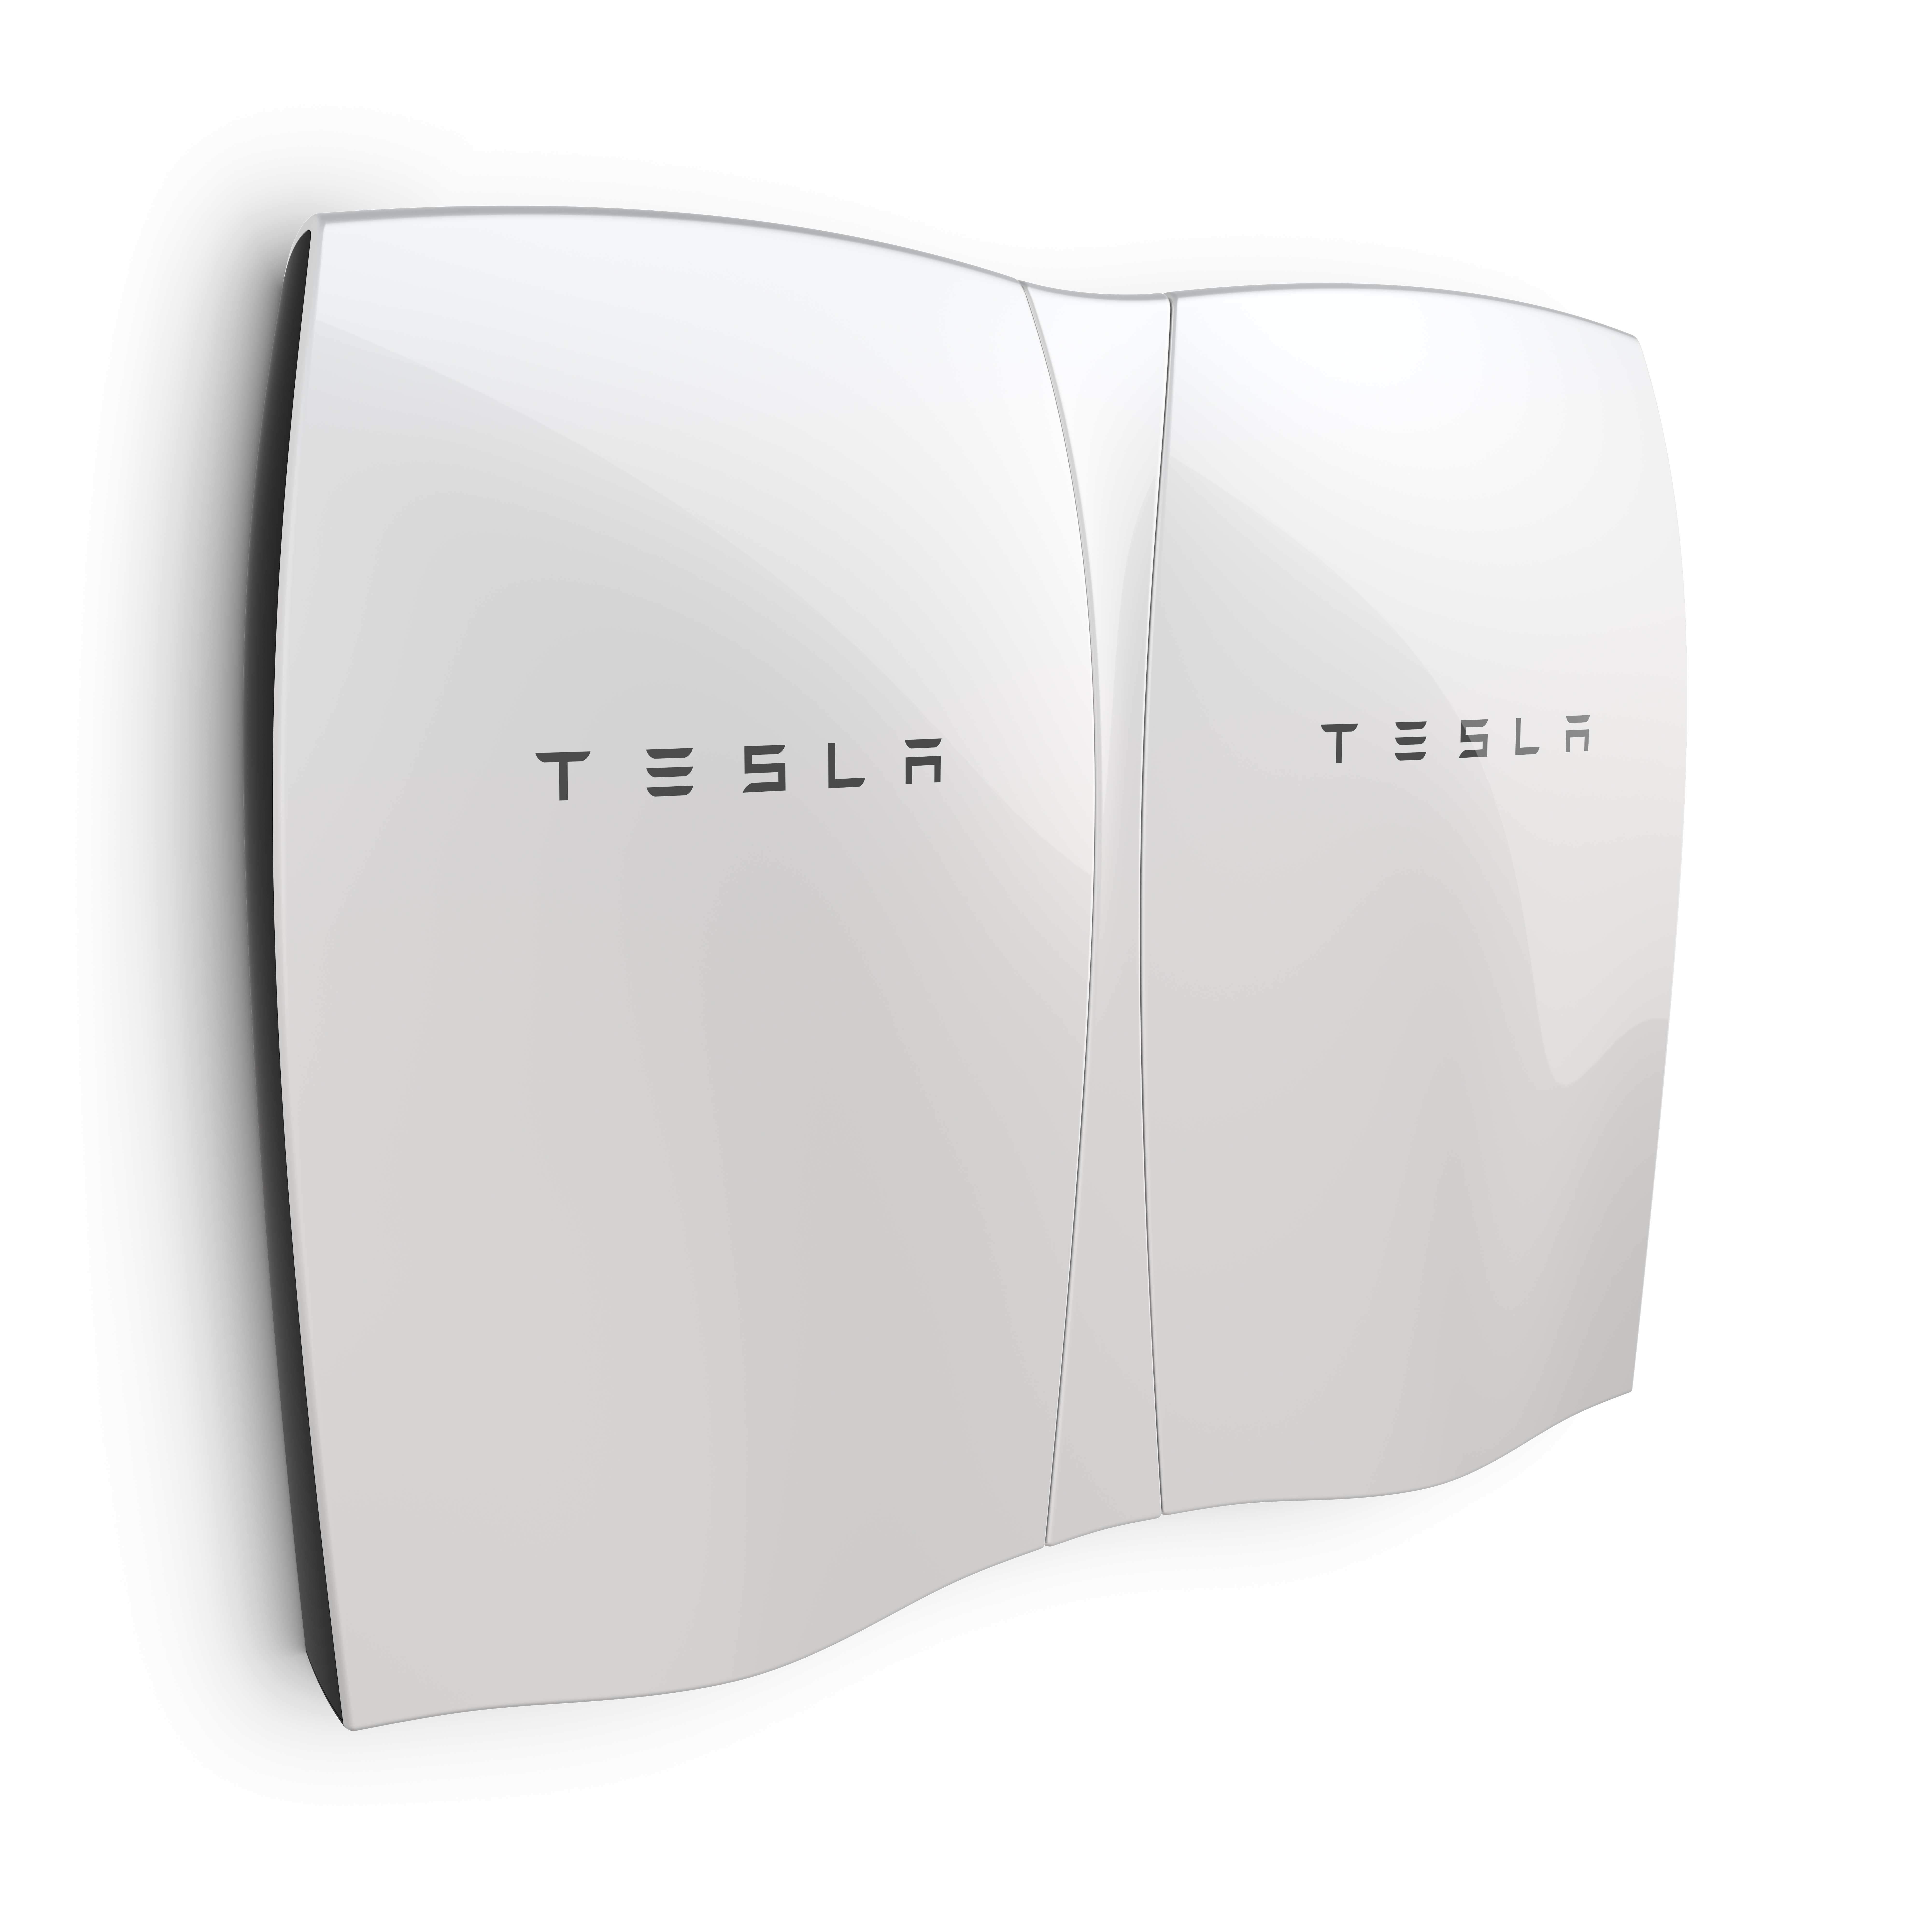 Tesla's massive battery installation in Aliso Springs